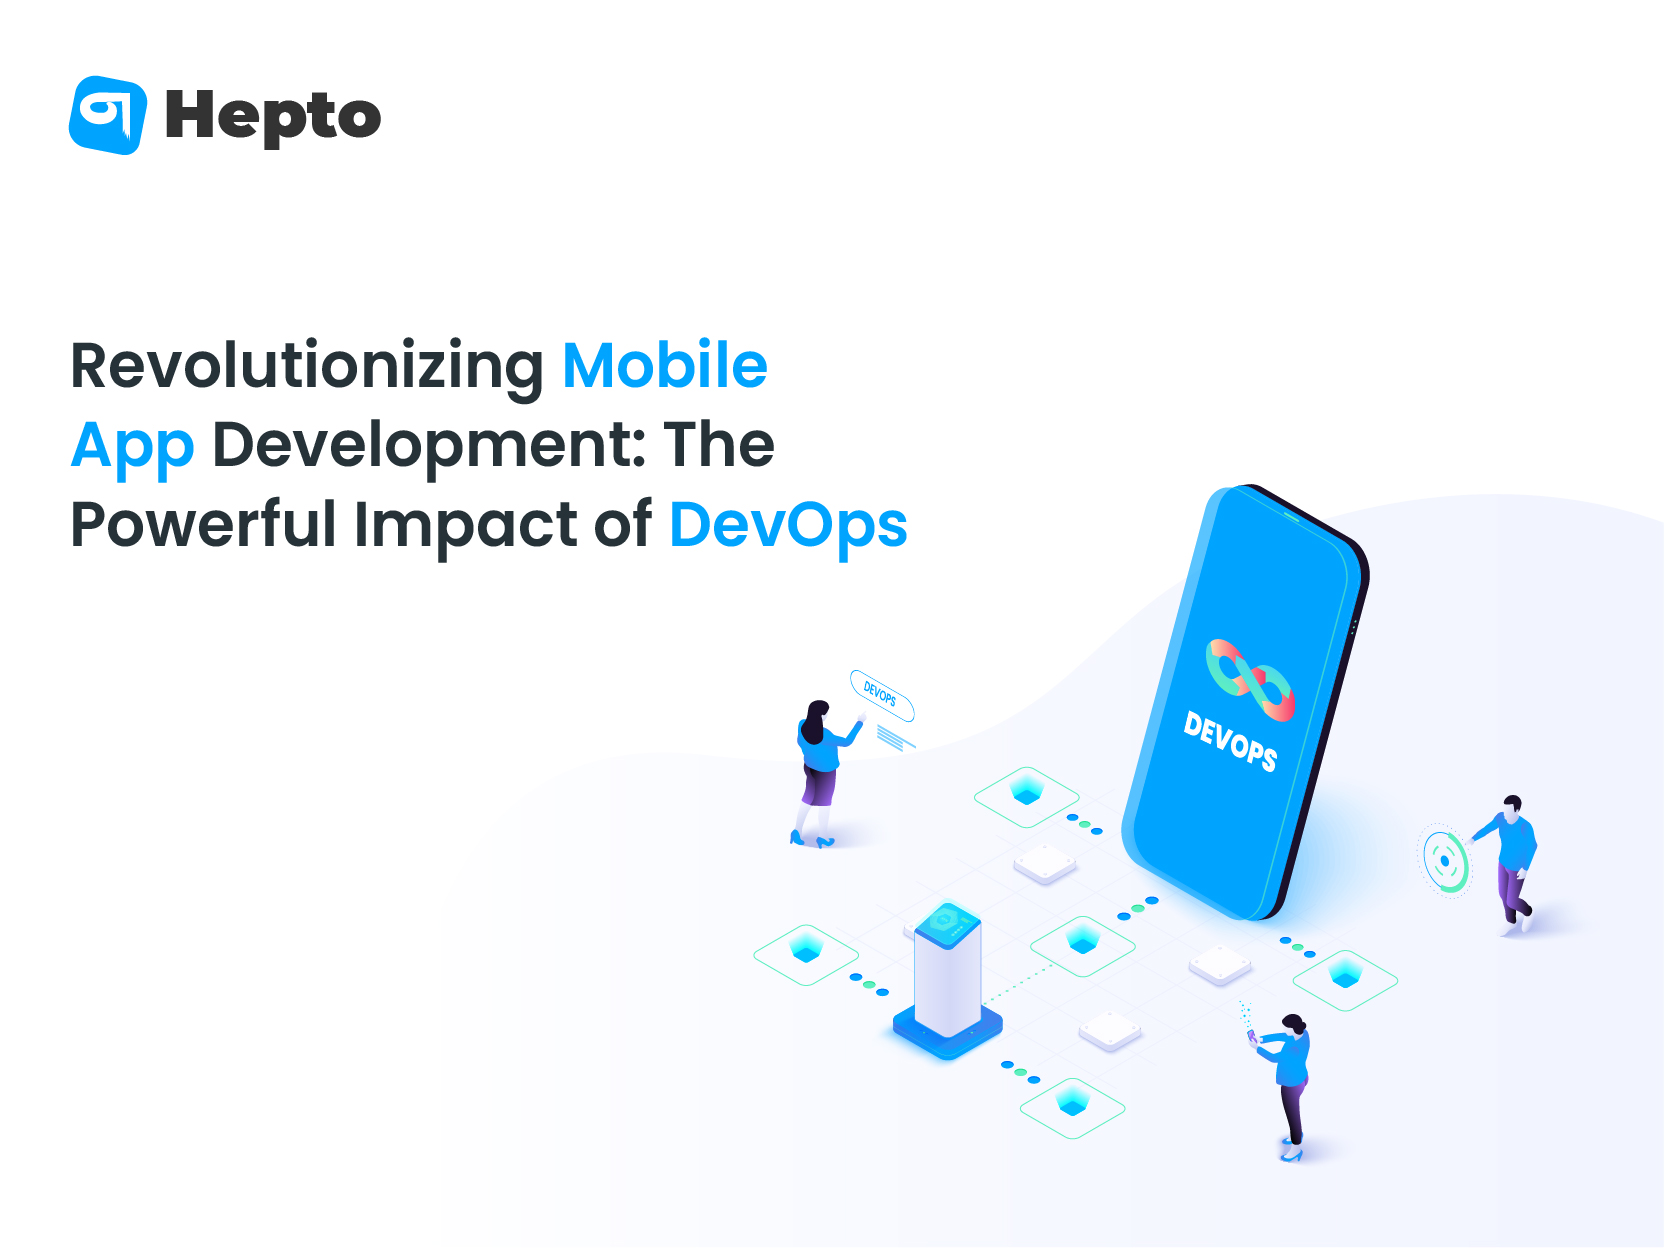 DevOps development company